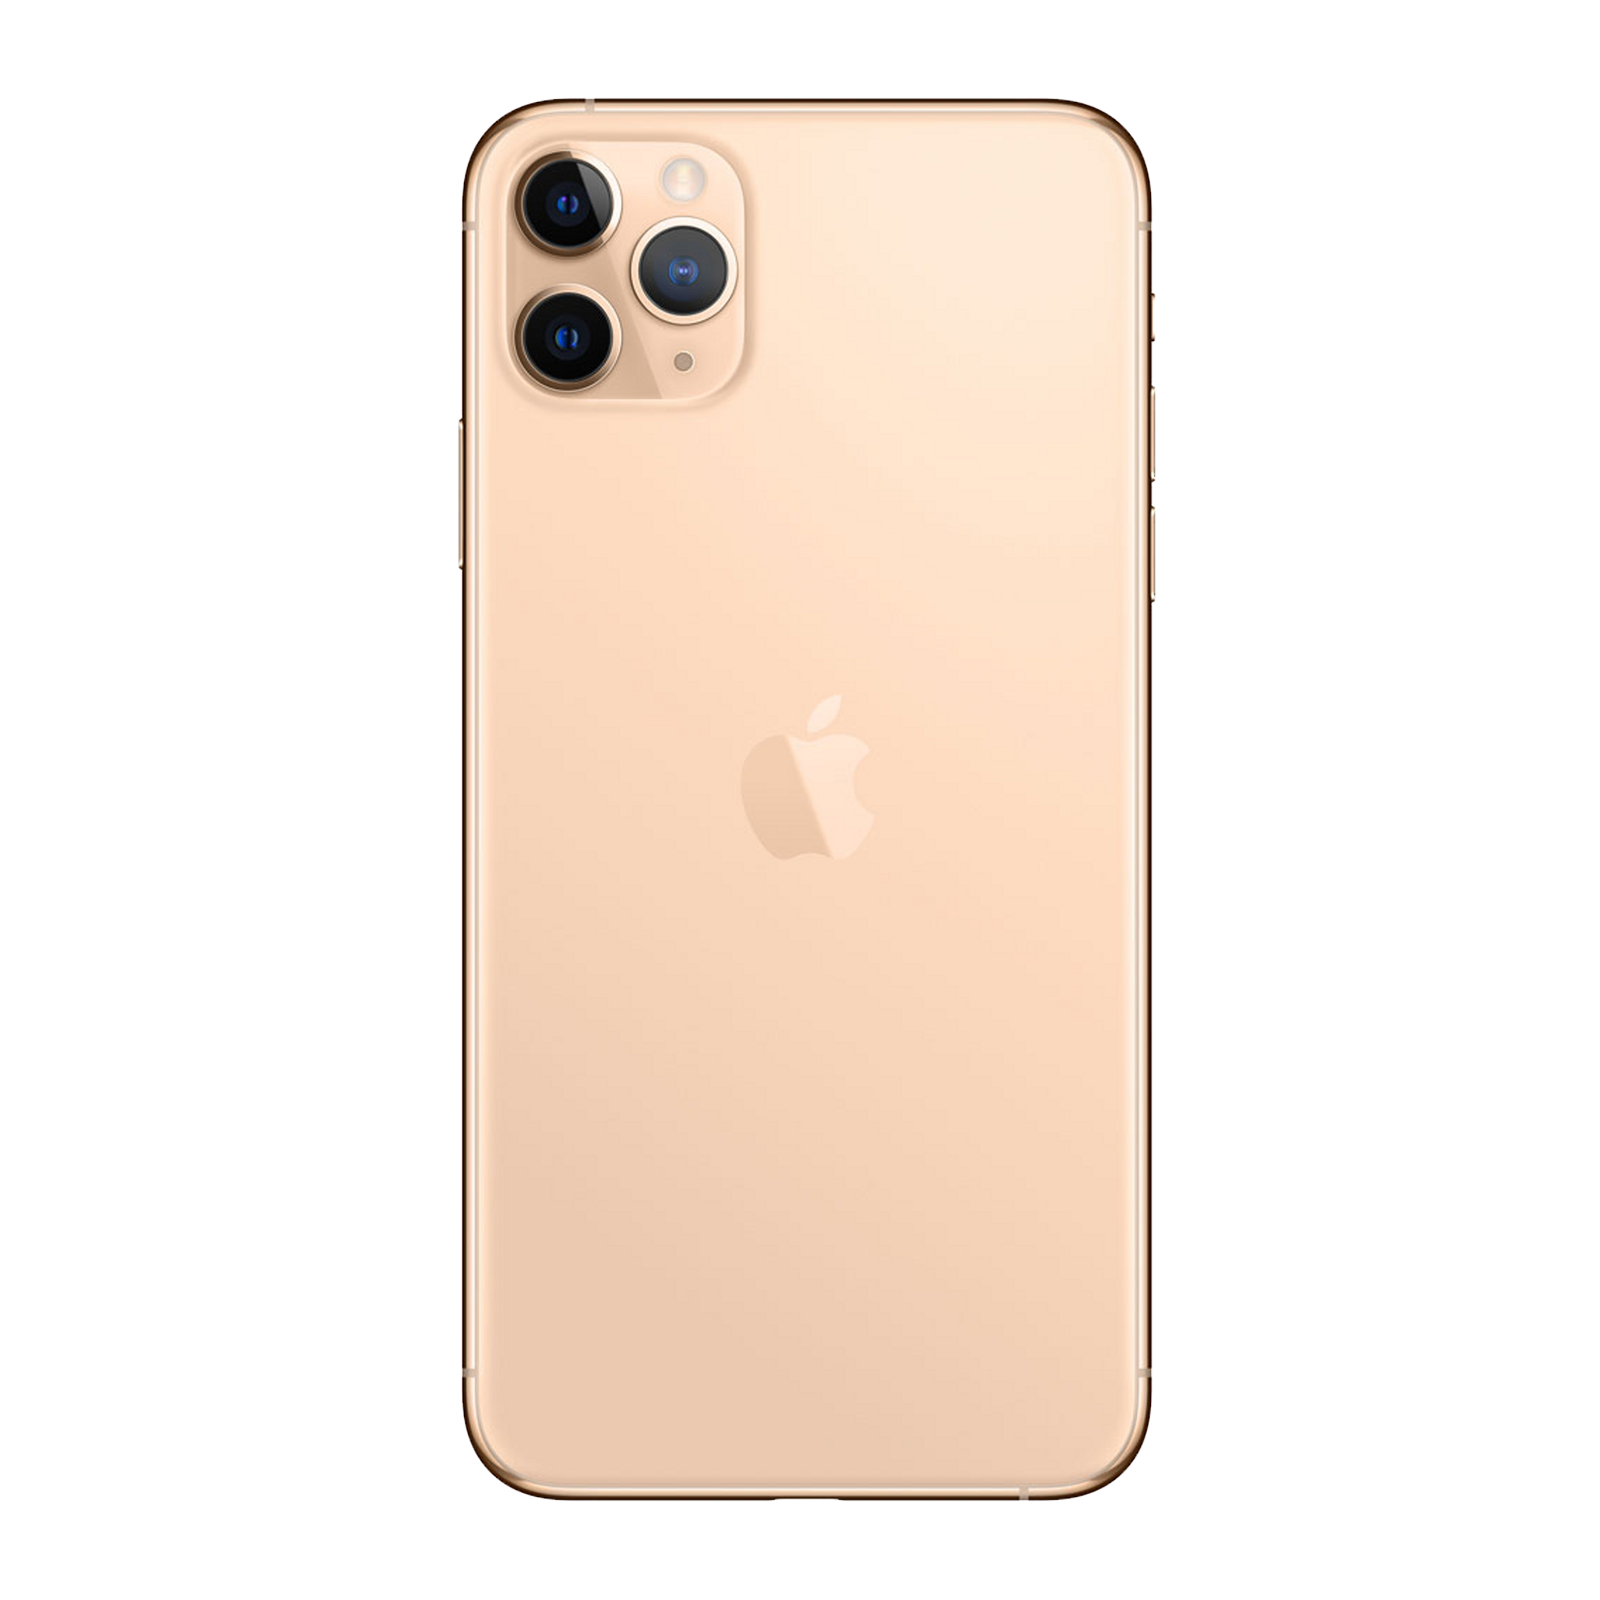 iPhone 11 Pro 256GB Gold Pristine - Unlocked